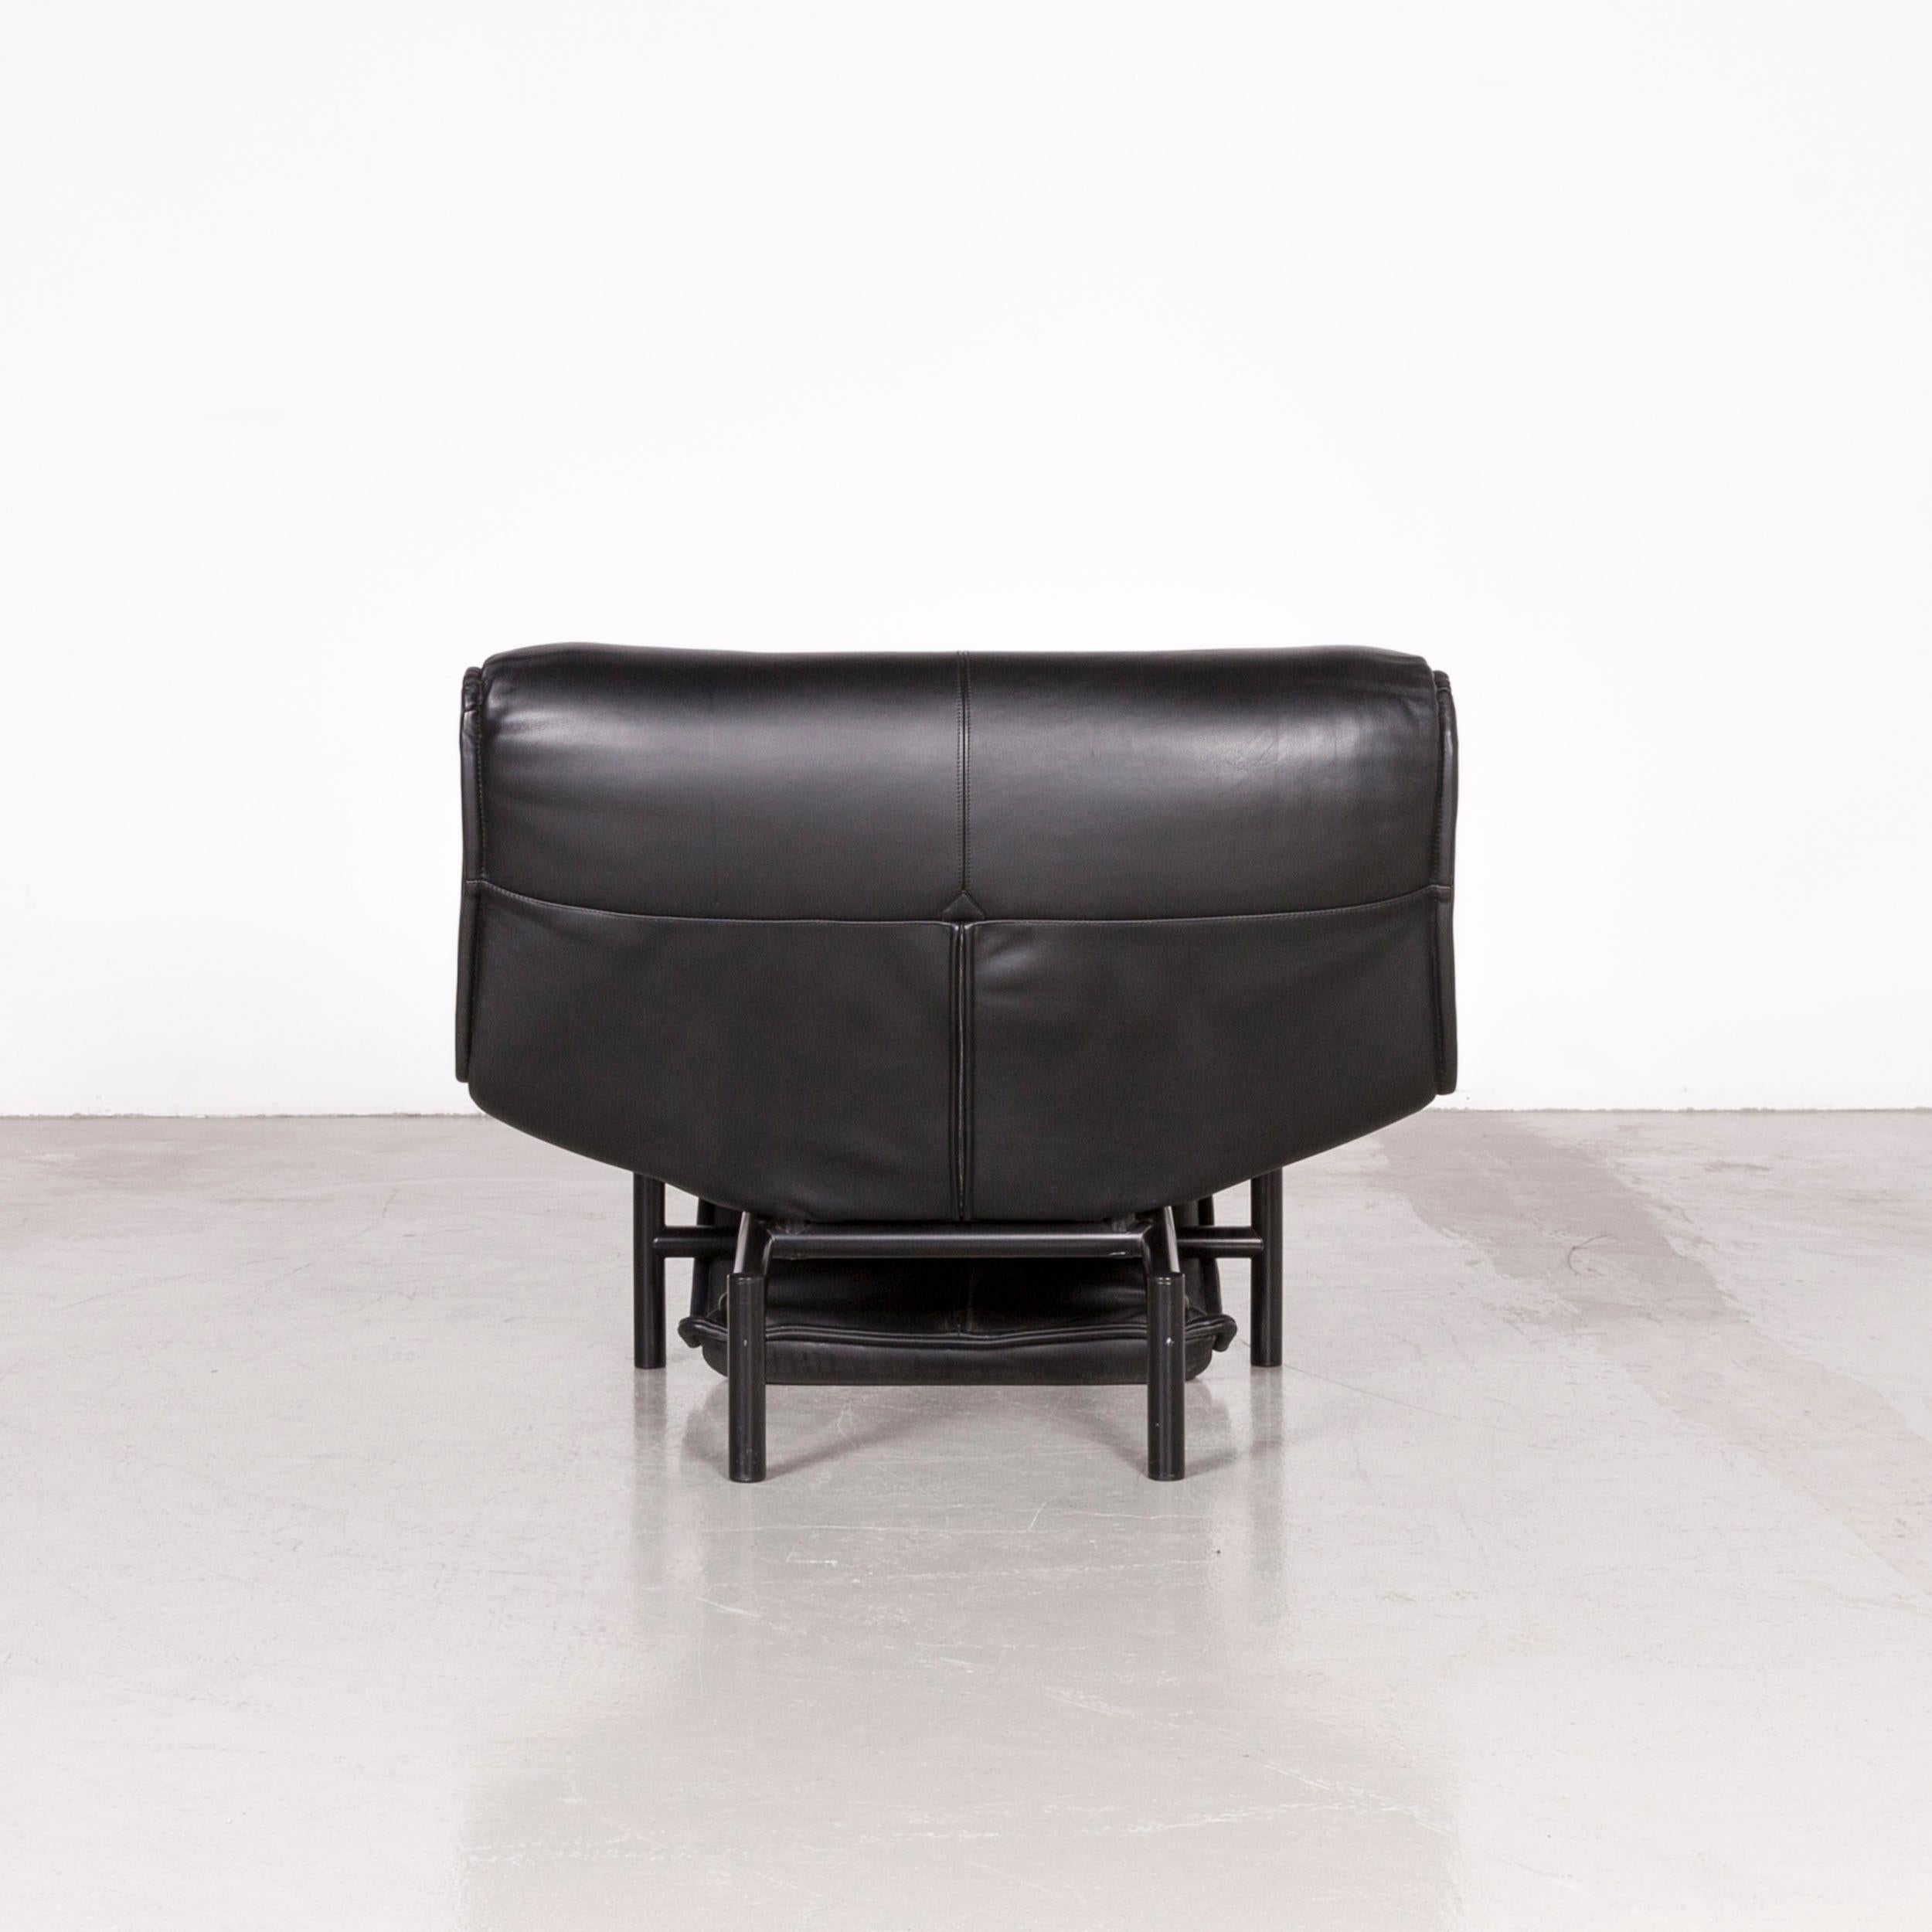 Cassina Veranda Designer Leather Armchair in Black Recliner Function For Sale 1